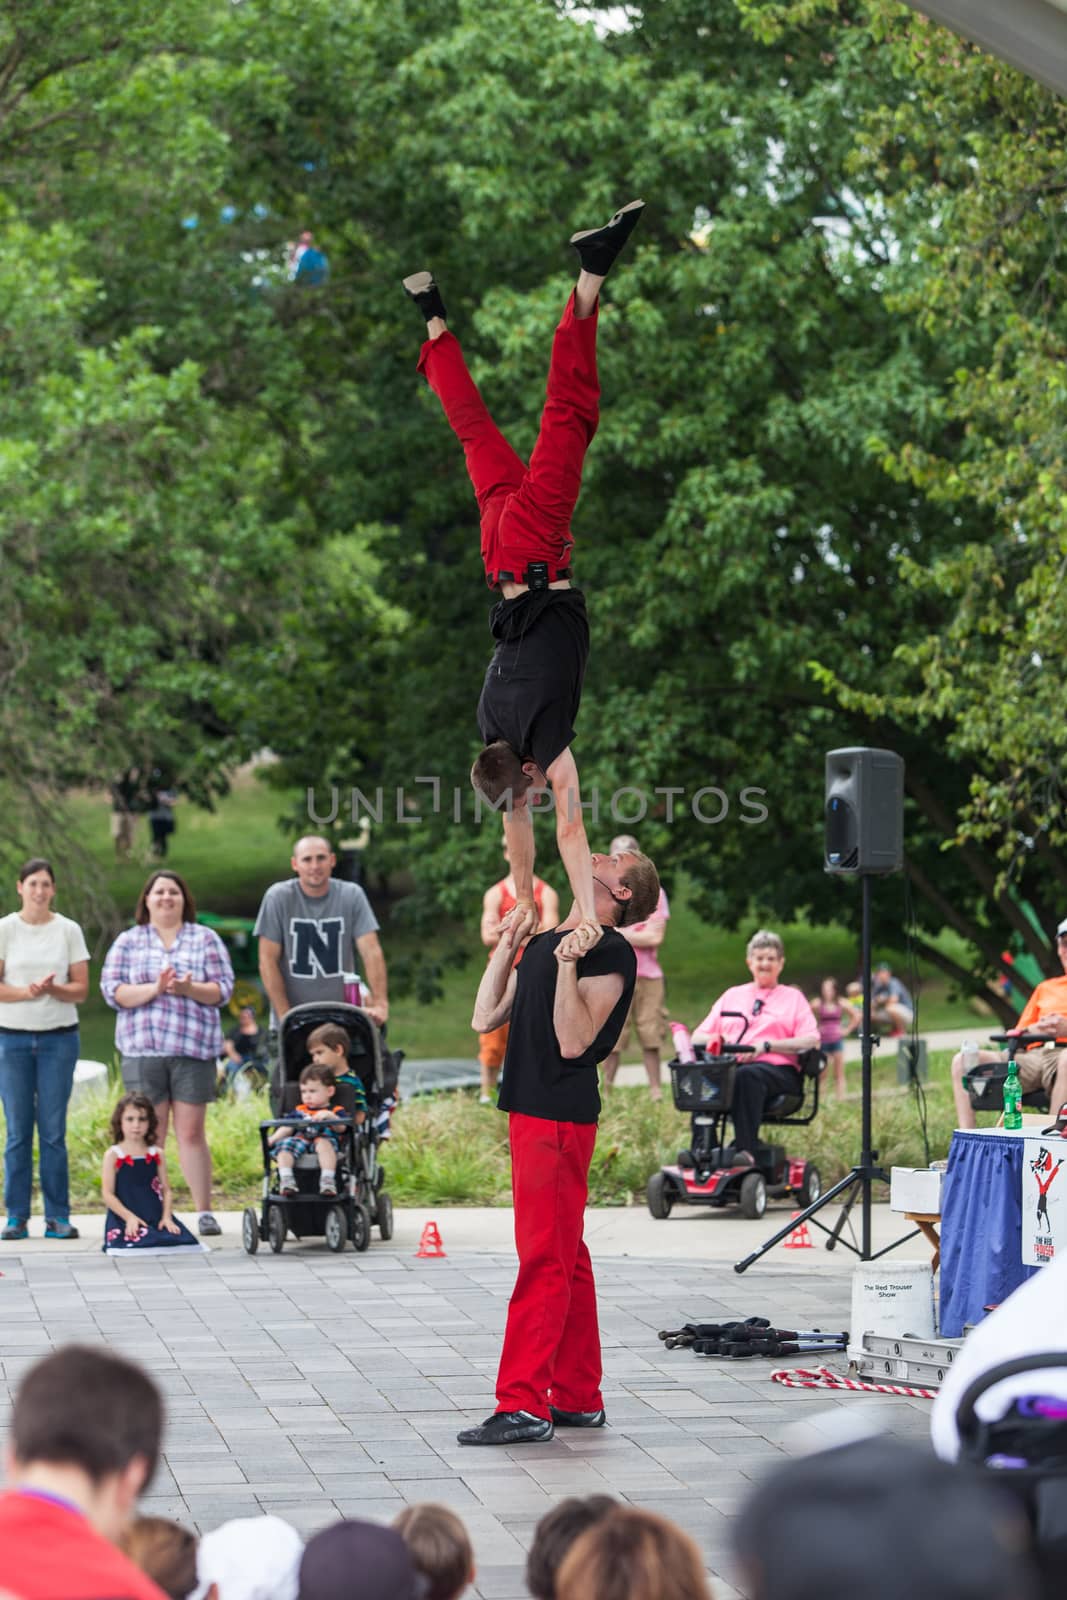 Acrobats at Iowa State Fair by Creatista